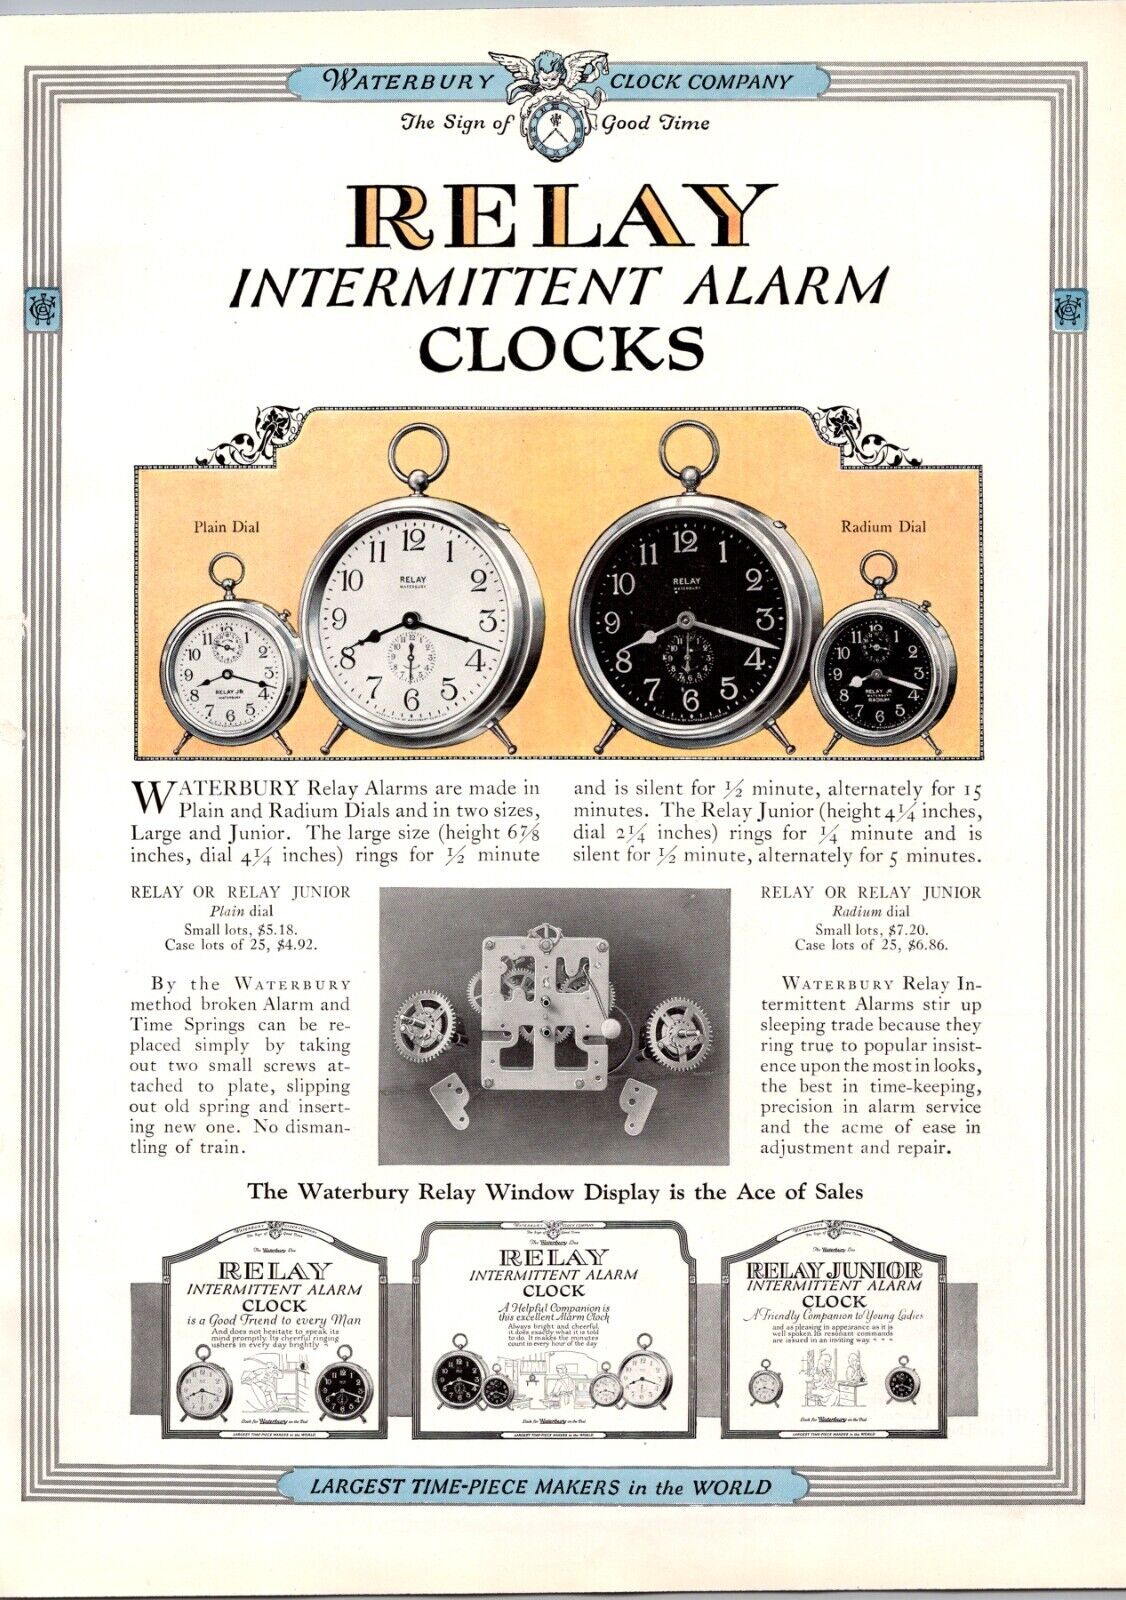 1924 Waterbury Clock Co RELAY Intermittent Alarm Clocks Catalog Page 2 sided